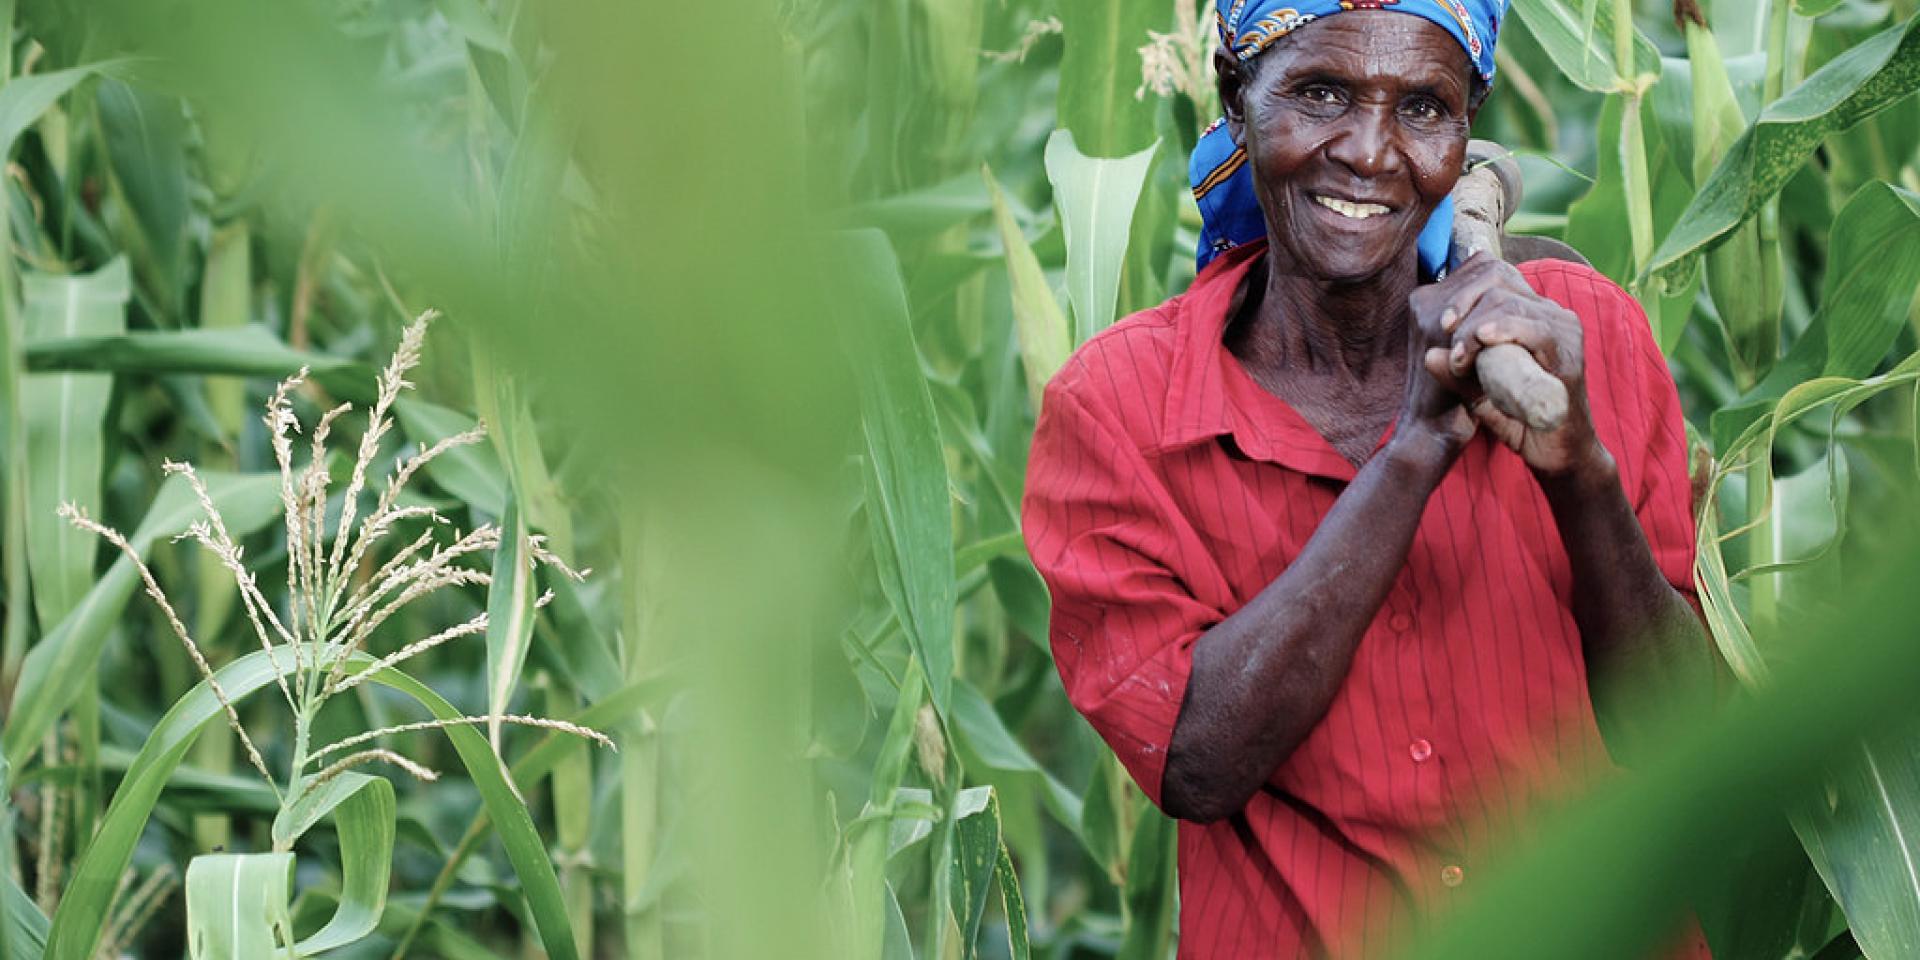 Woman farmer at the Nyando Climate Smart Villages. Photo: K. Trautmann/CCAFS